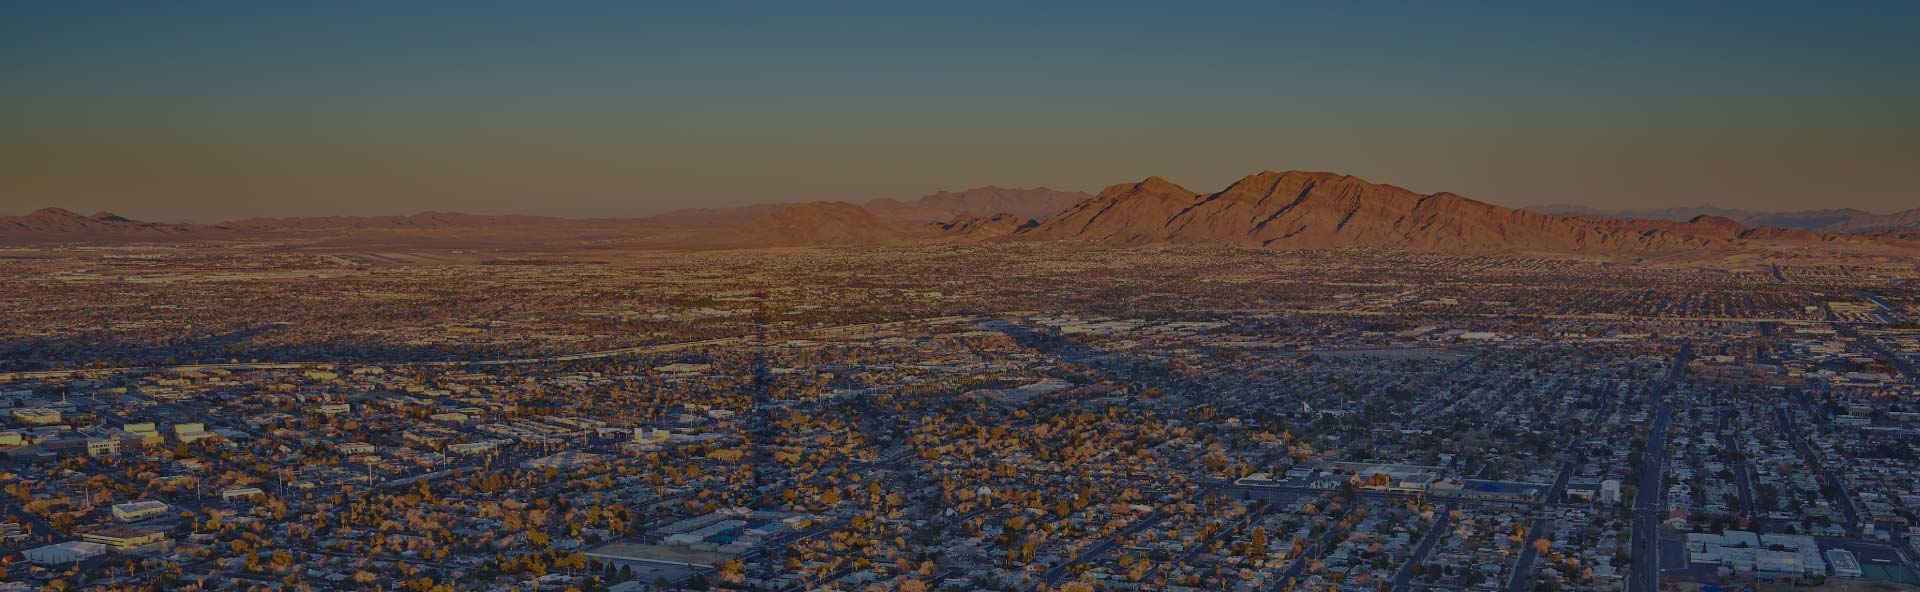 NAHREP Greater Las Vegas can help YOU build your business